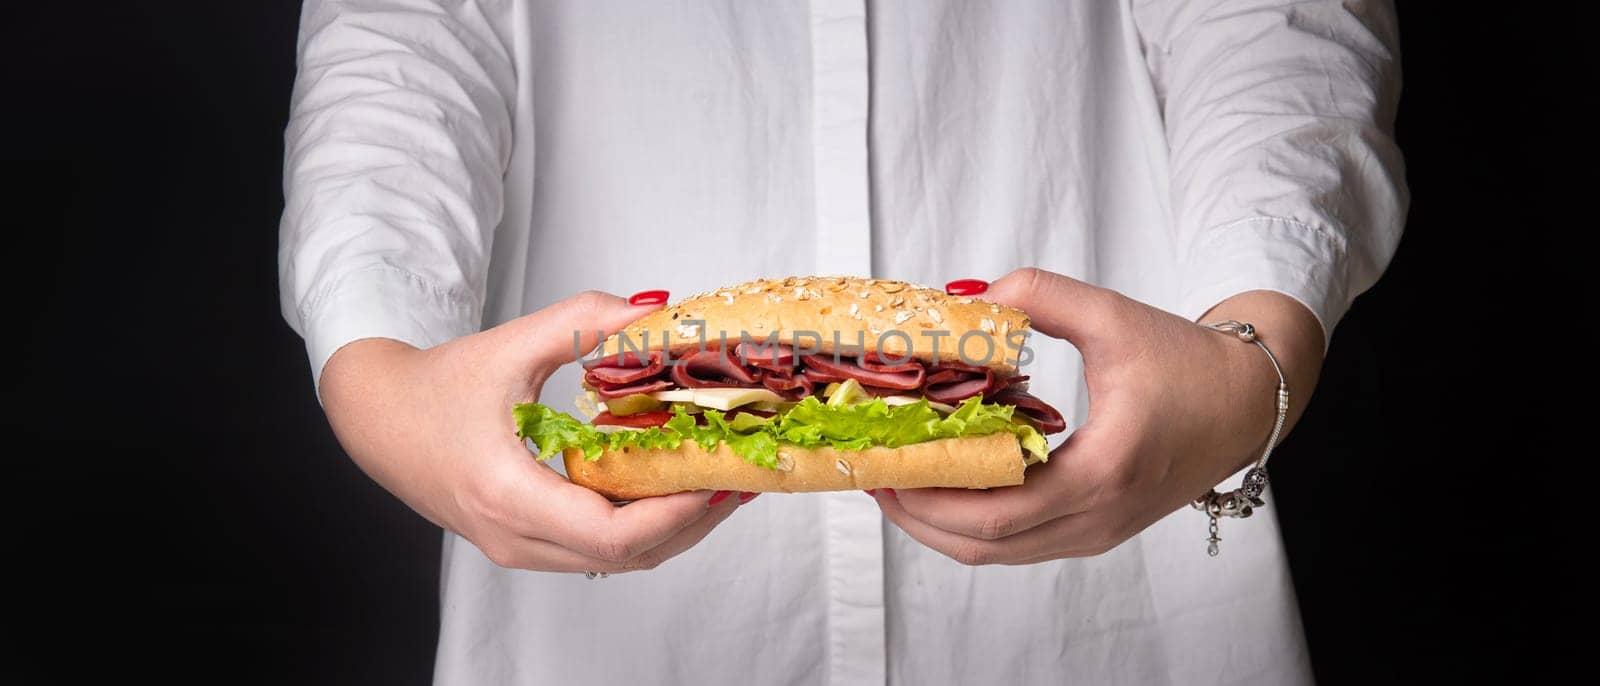 sandwich in women's hands on a black background by Pukhovskiy